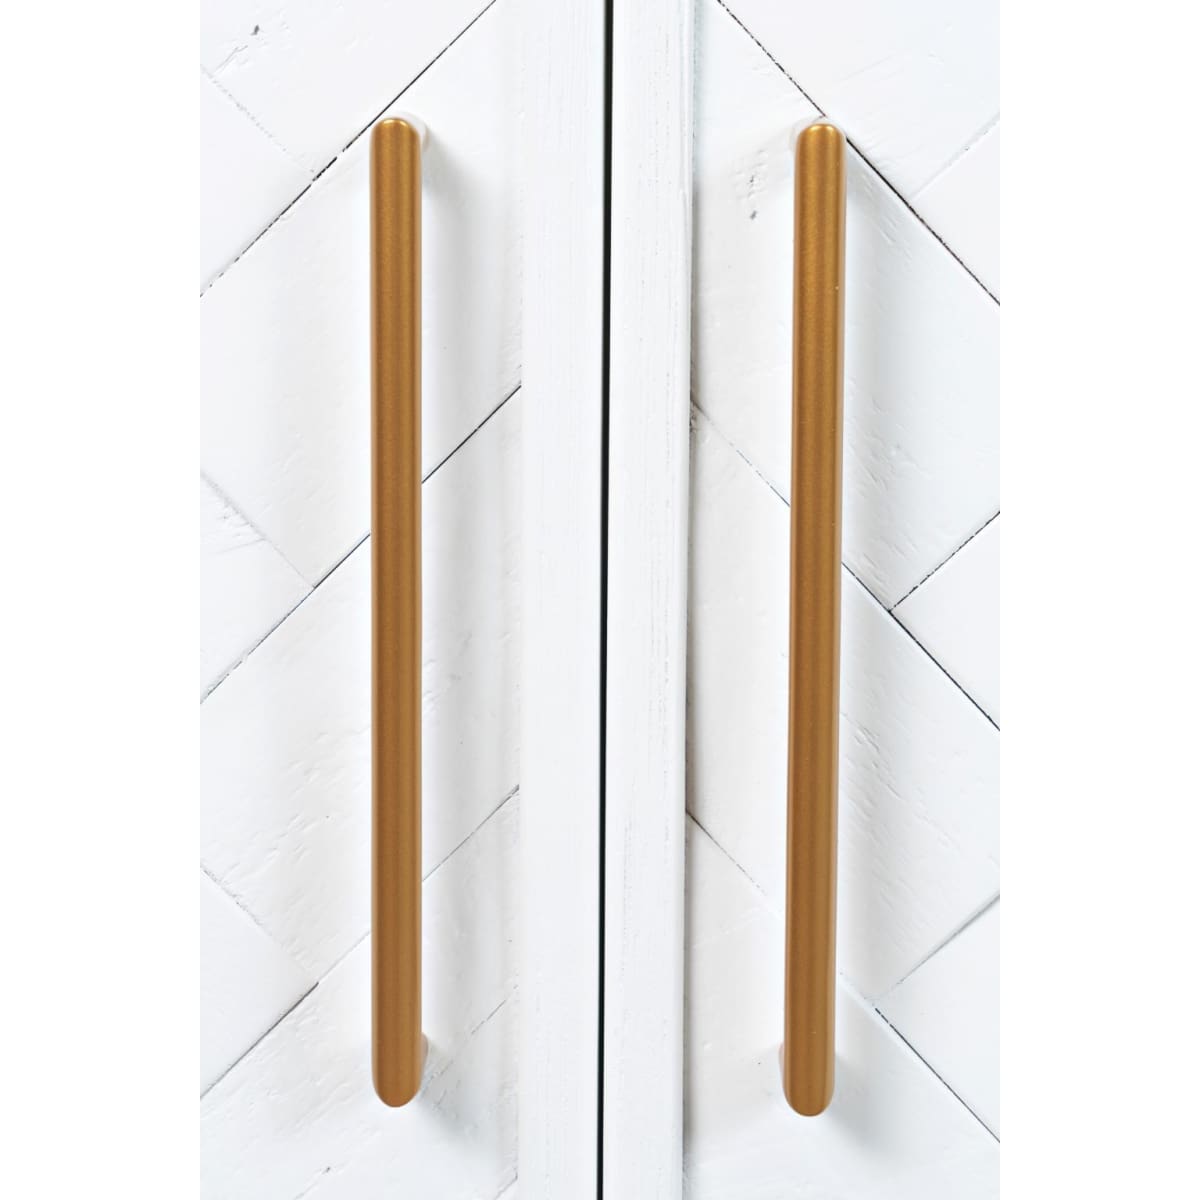 Gramercy 2 Door Accent Cabinet-White - 40X15X32 - accent cabinet